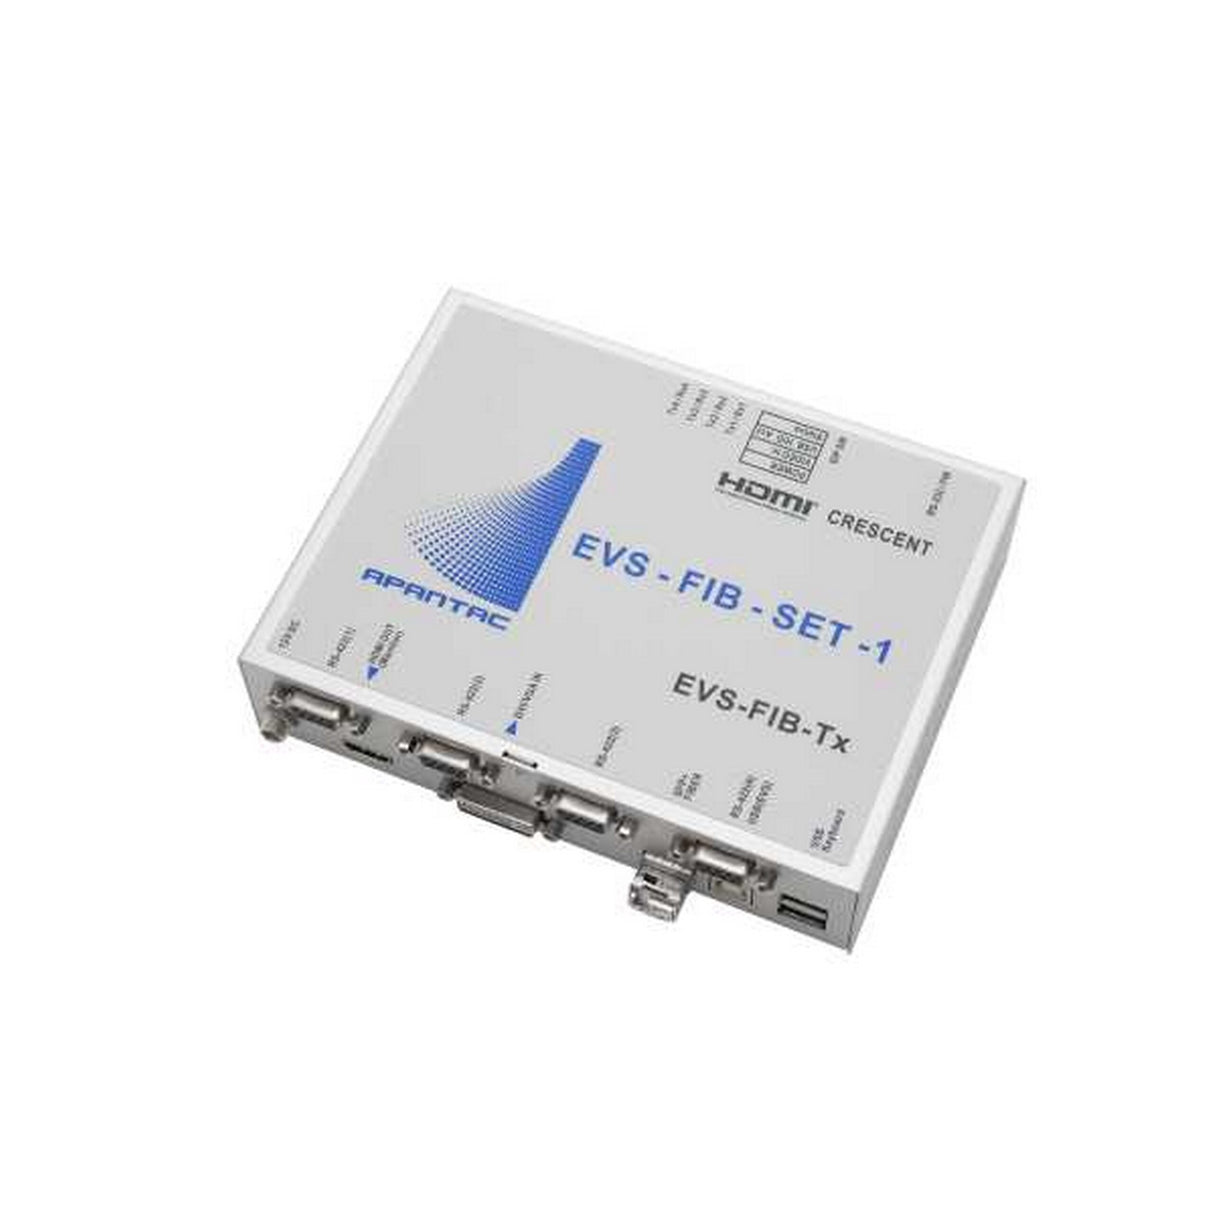 Apantac EVS-FIB-Tx USB RS-422 and VGA Extender for EVS